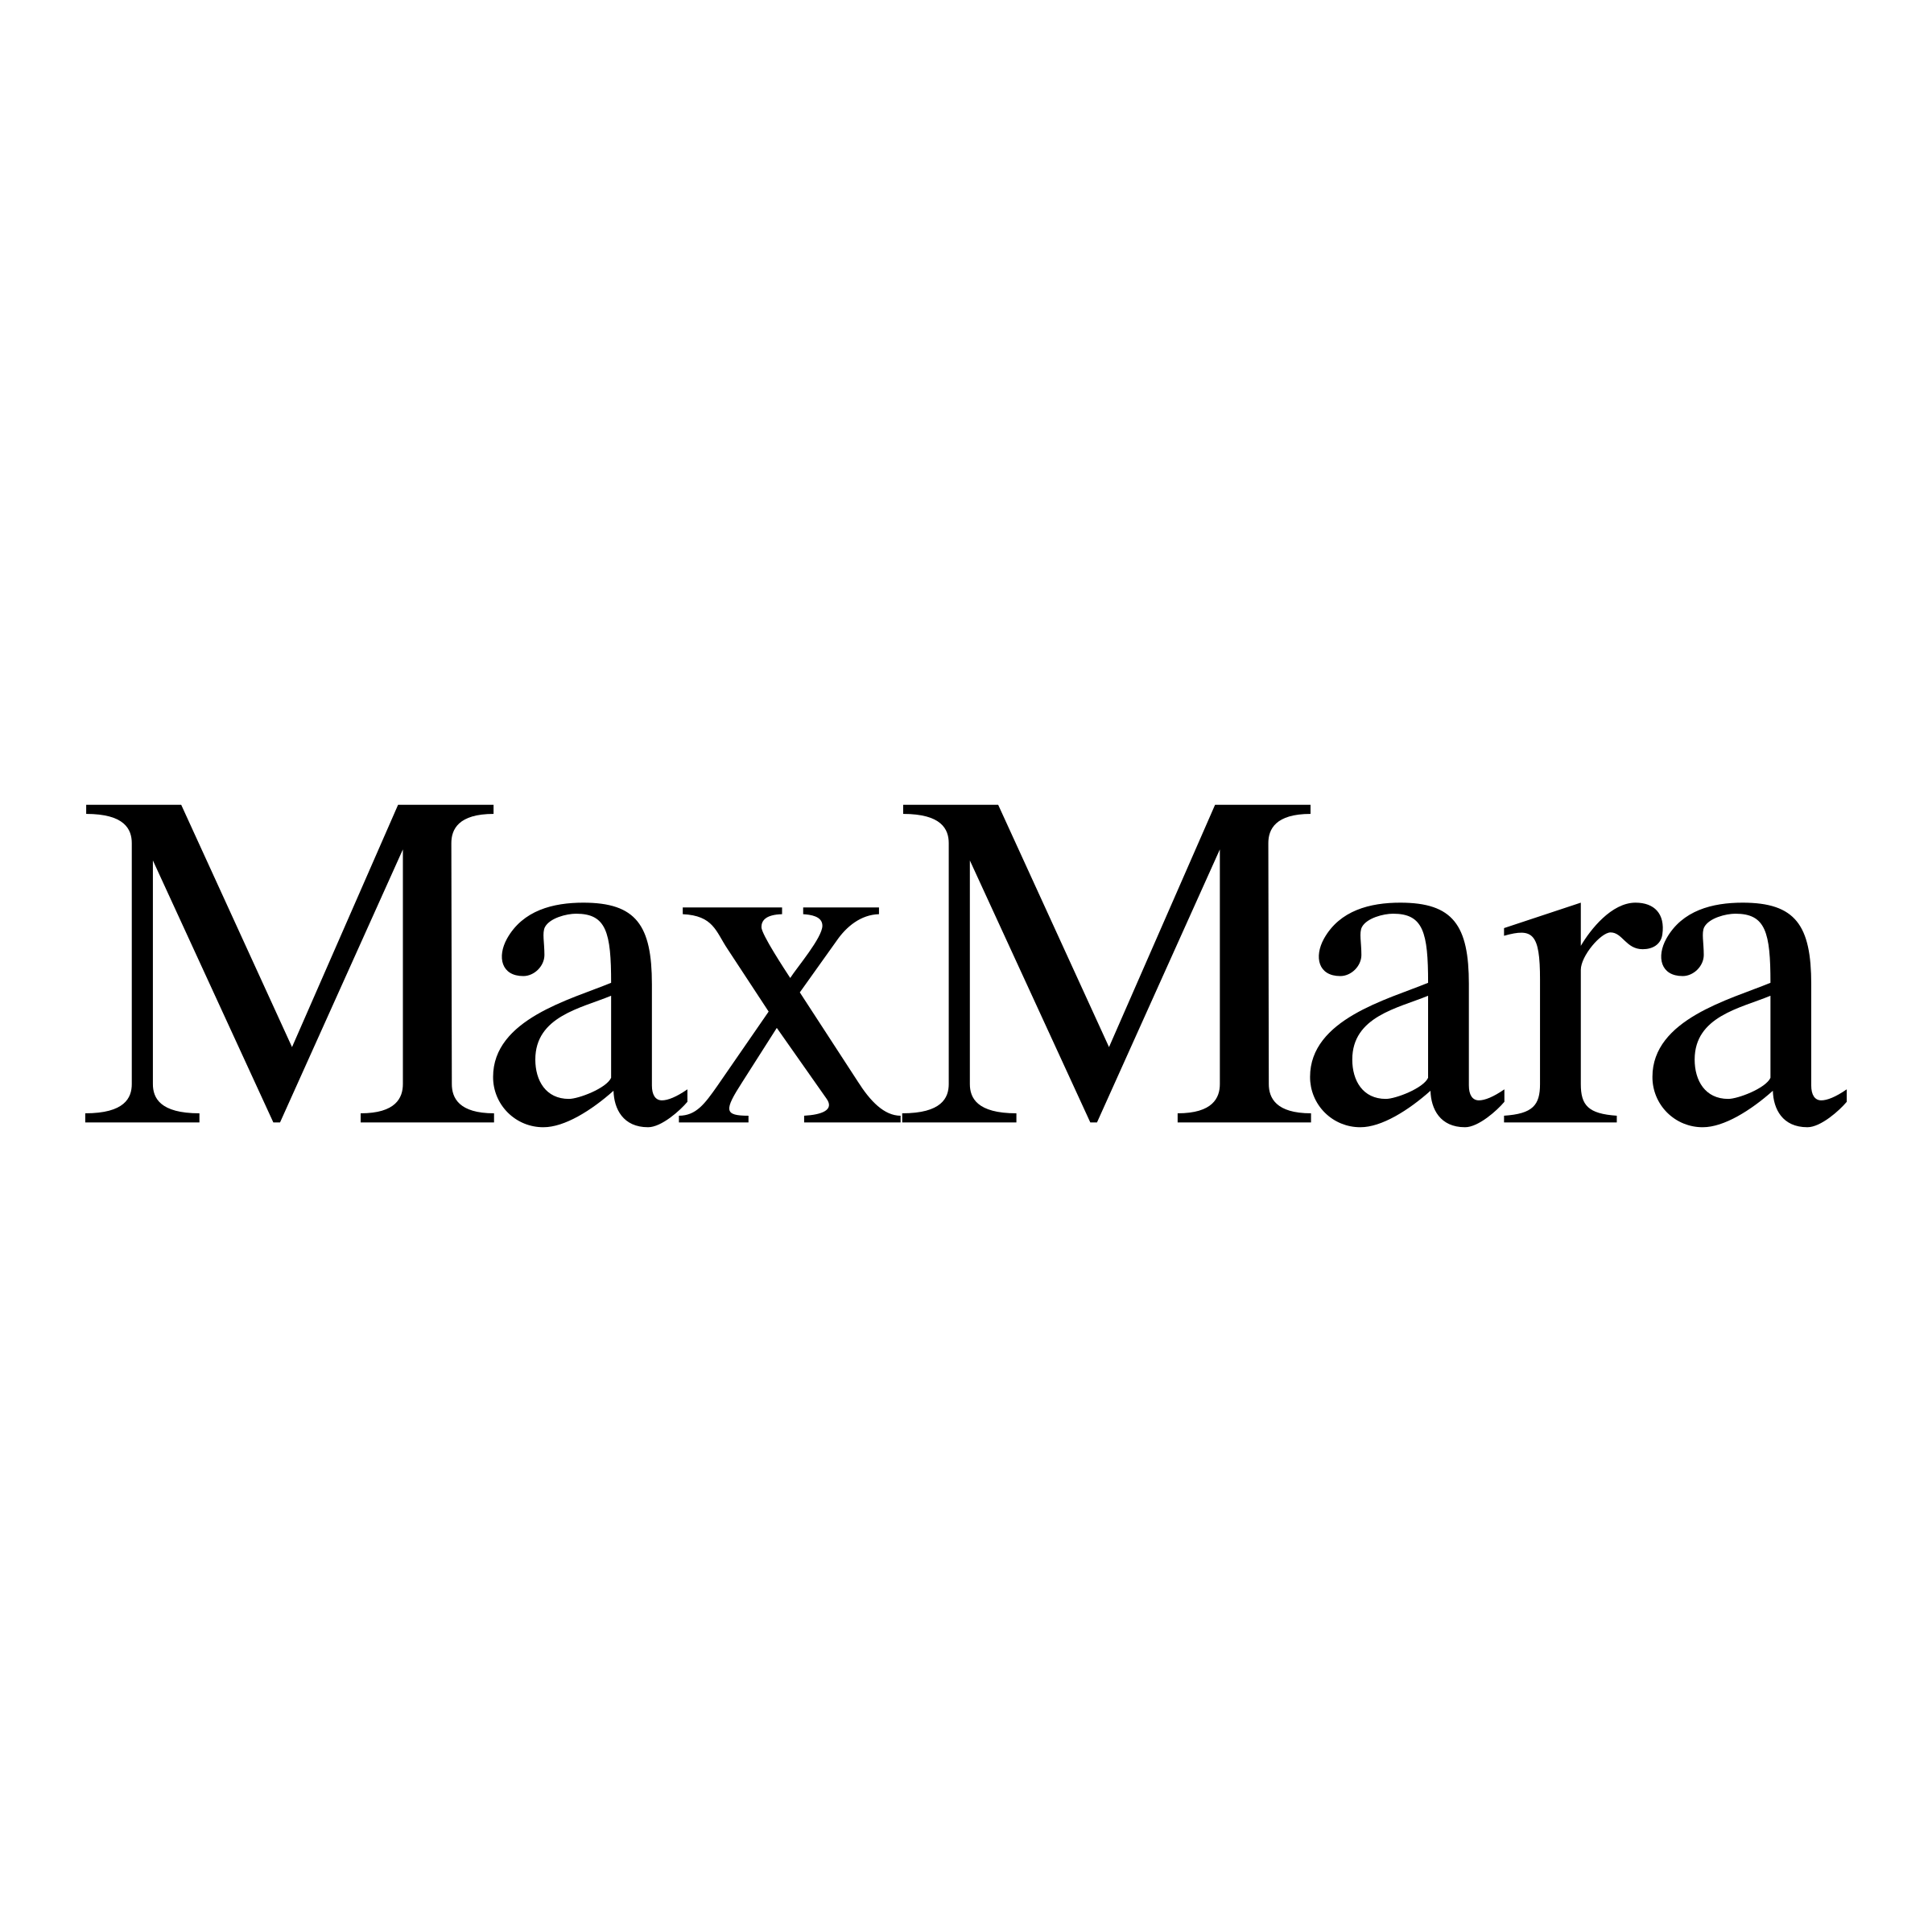 Max Mara Logo - MaxMara Logo PNG Transparent & SVG Vector - Freebie Supply